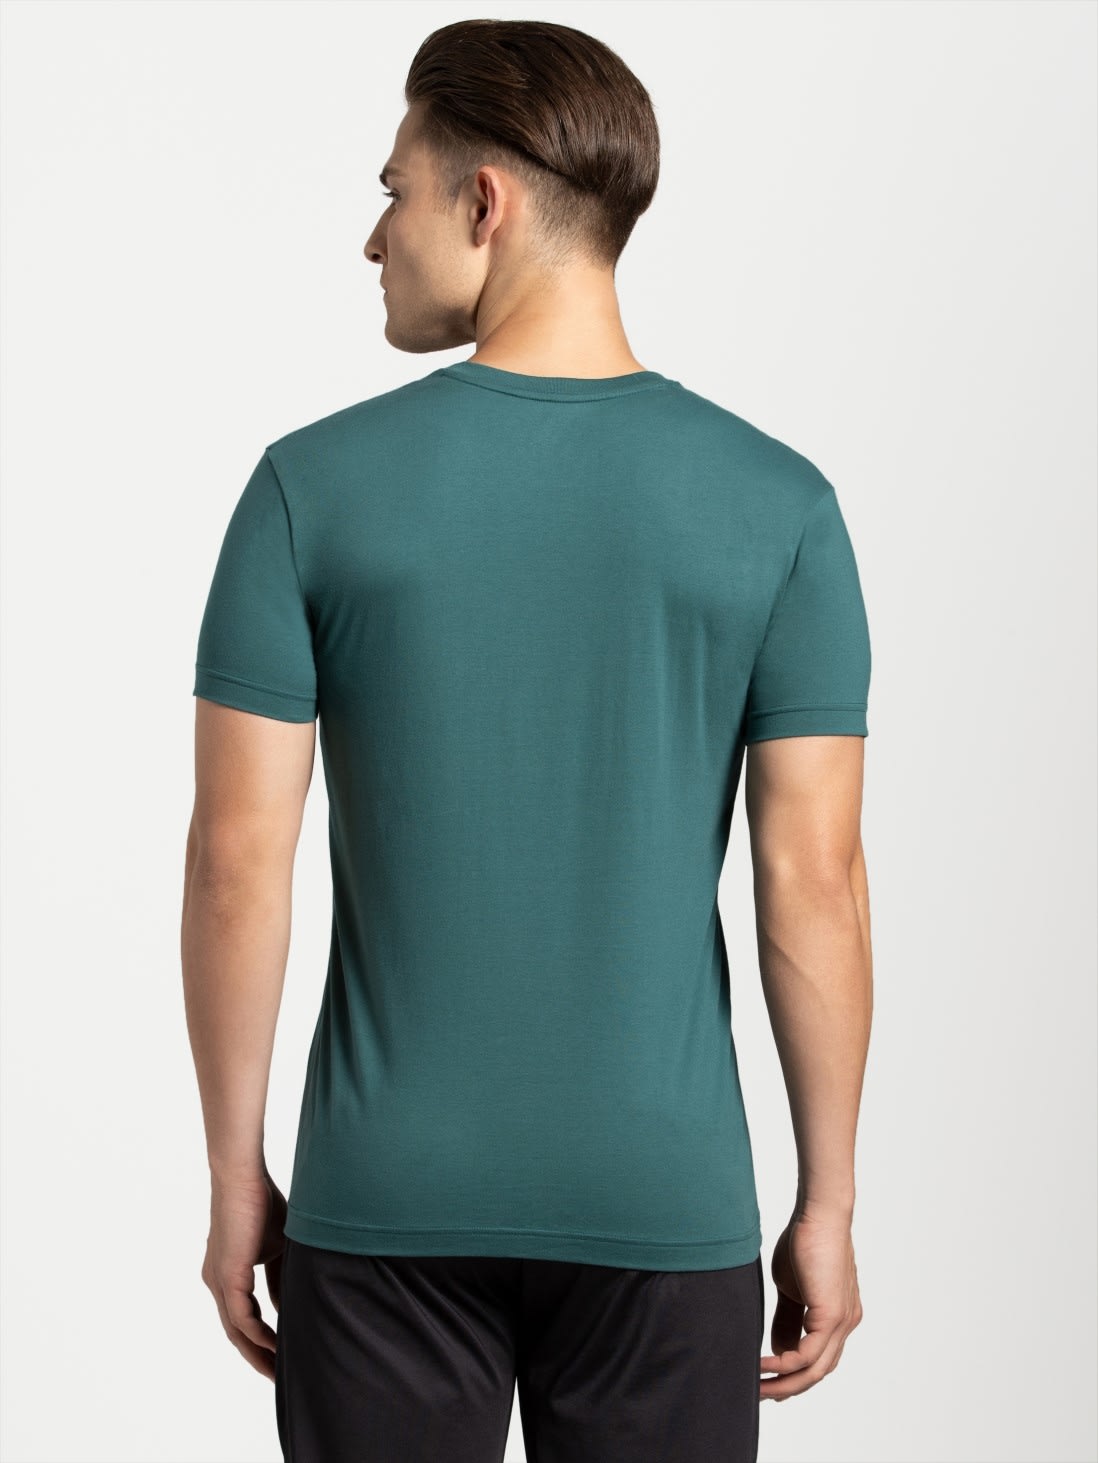 Jockey Men Outerwear Tops | Pacific Green V-Neck T-shirt